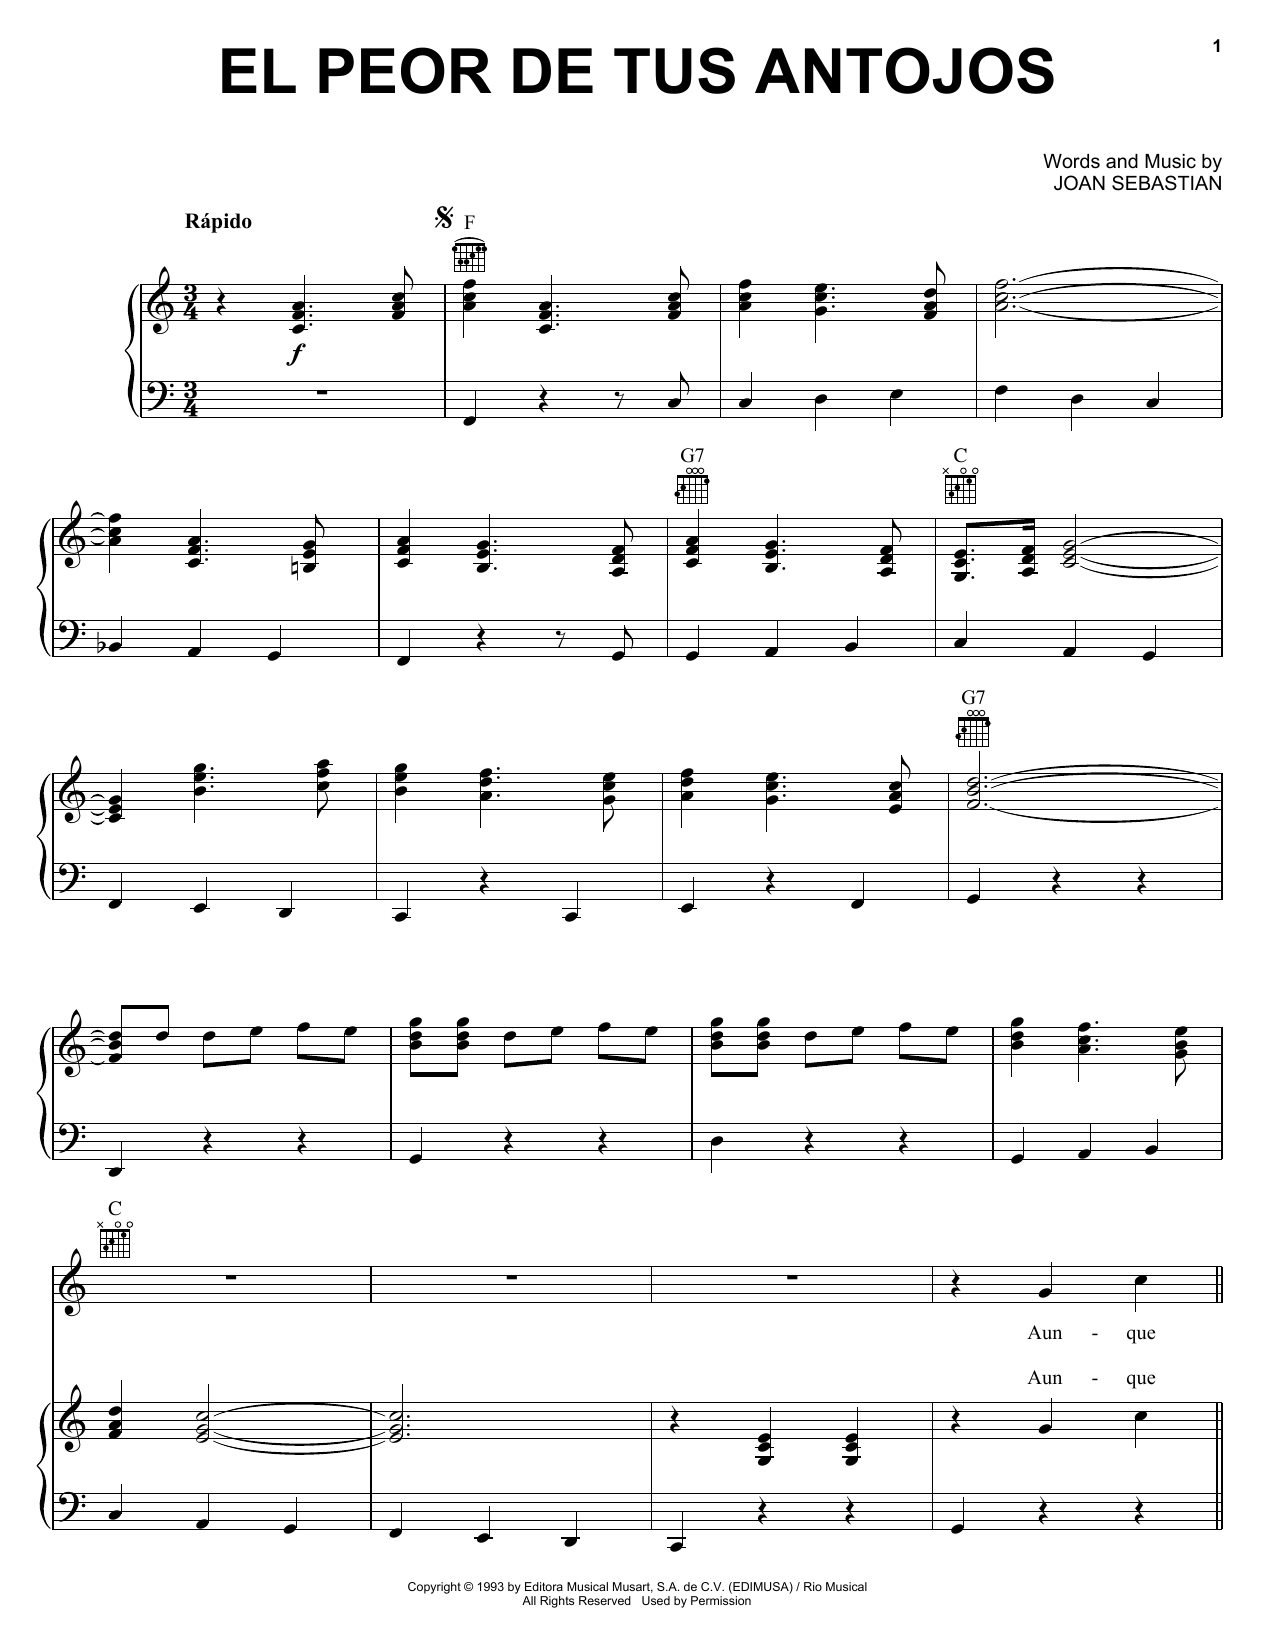 Joan Sebastian El Peor De Tus Antojos Sheet Music Notes & Chords for Piano, Vocal & Guitar (Right-Hand Melody) - Download or Print PDF